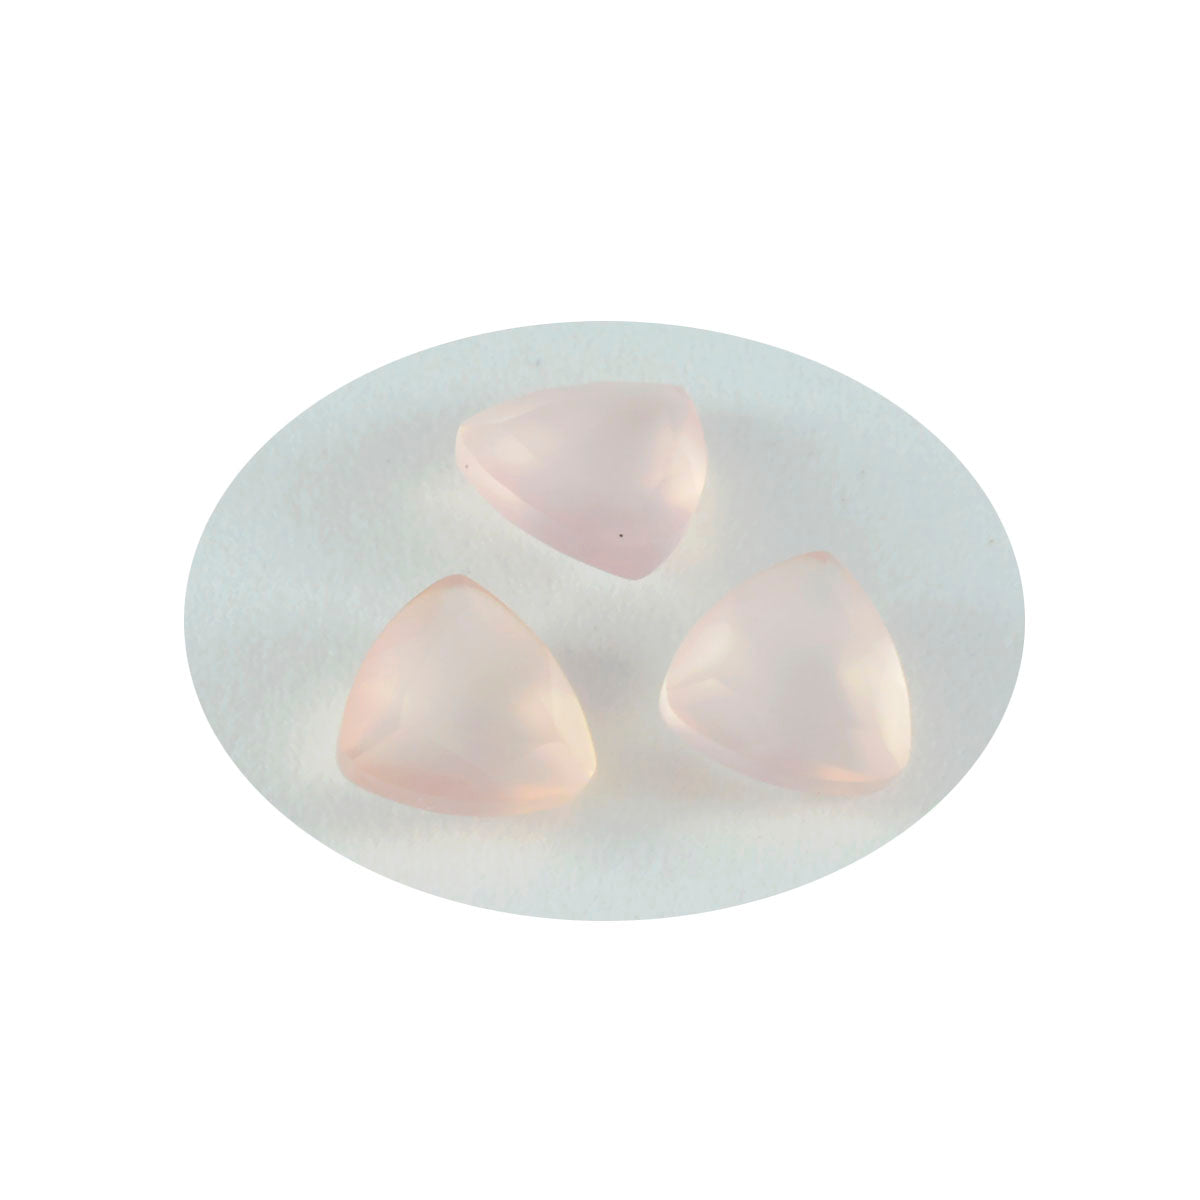 Riyogems 1PC Pink Rose Quartz Faceted 9x9 mm Trillion Shape A+ Quality Loose Gemstone